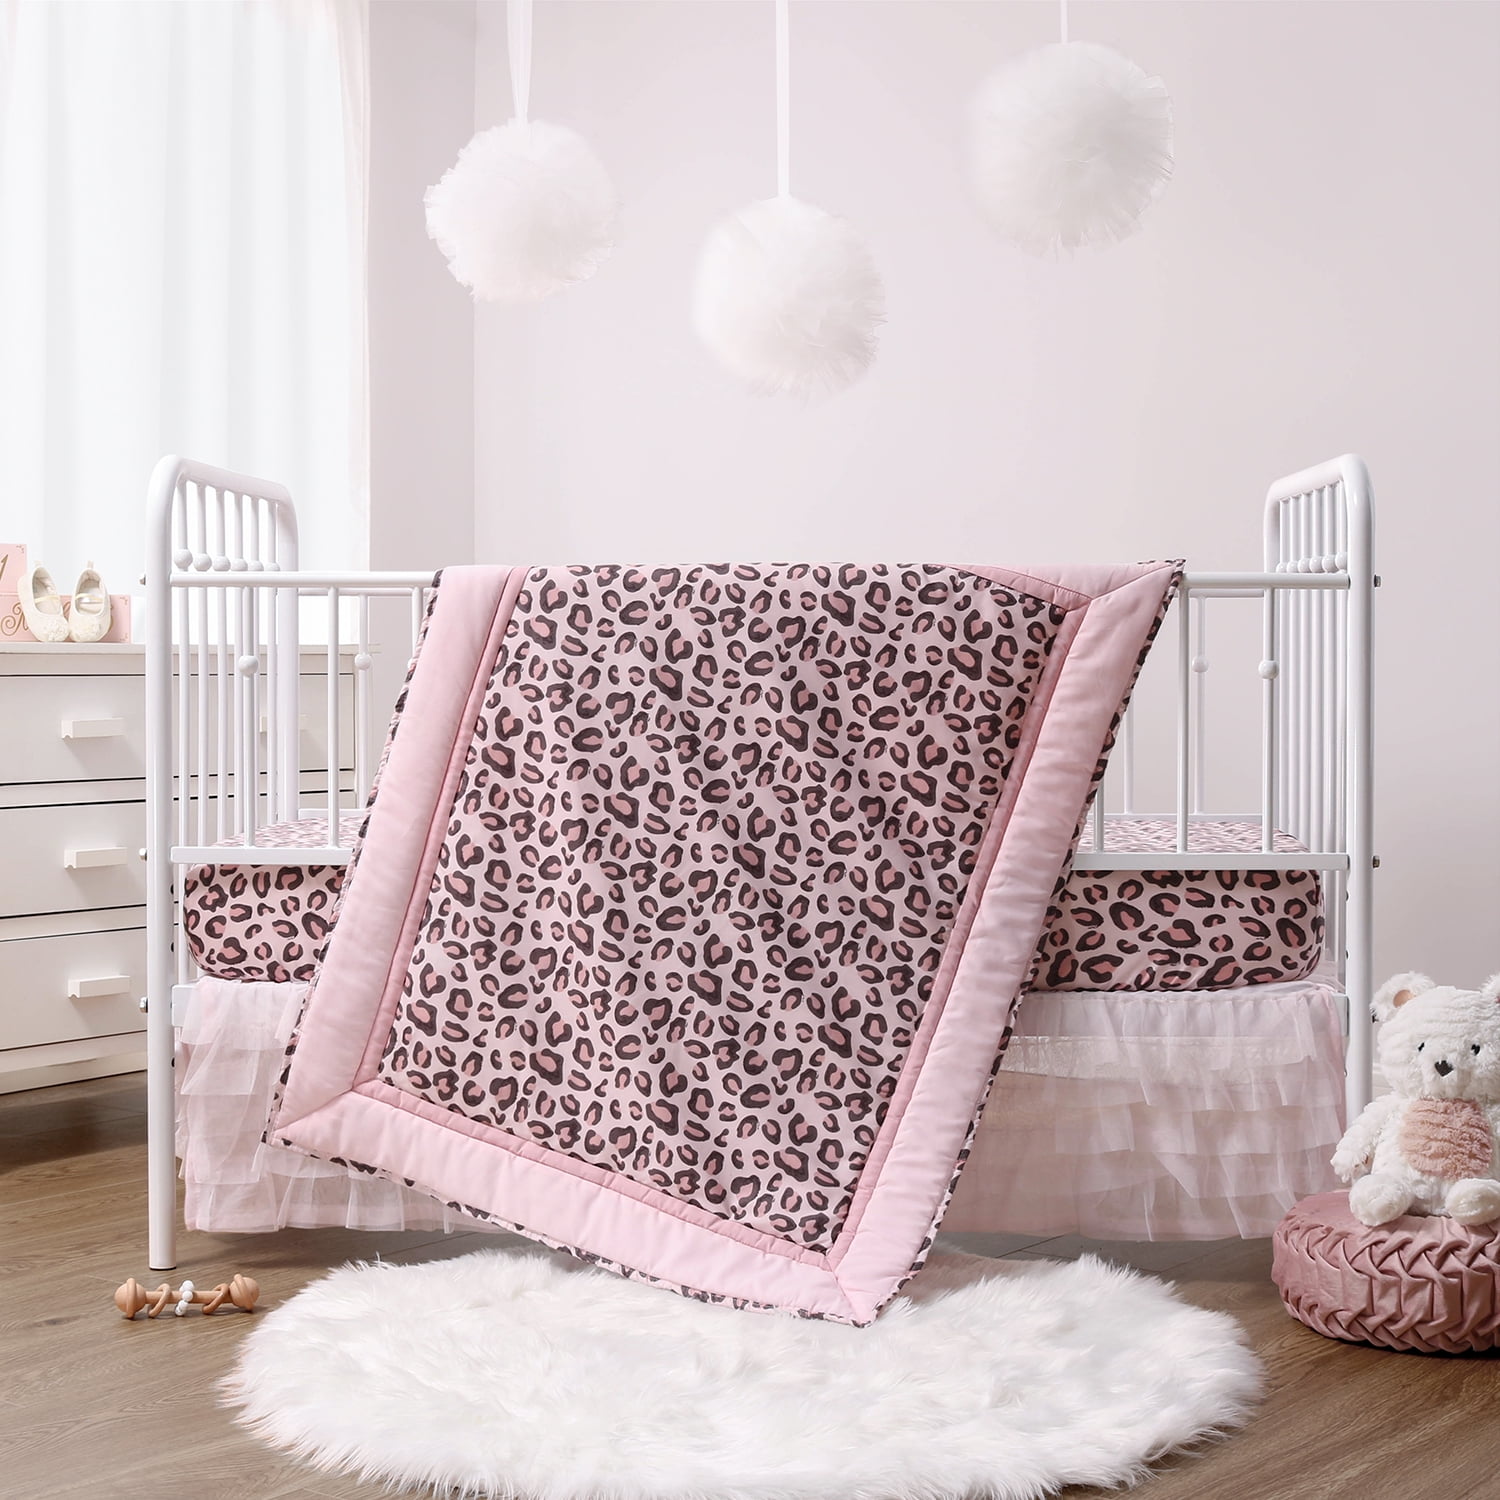 6 Yd Hello Kitty and Teddy Rainbow Walk Fabric Cotton - Great Bedroom Decor  - Supplies